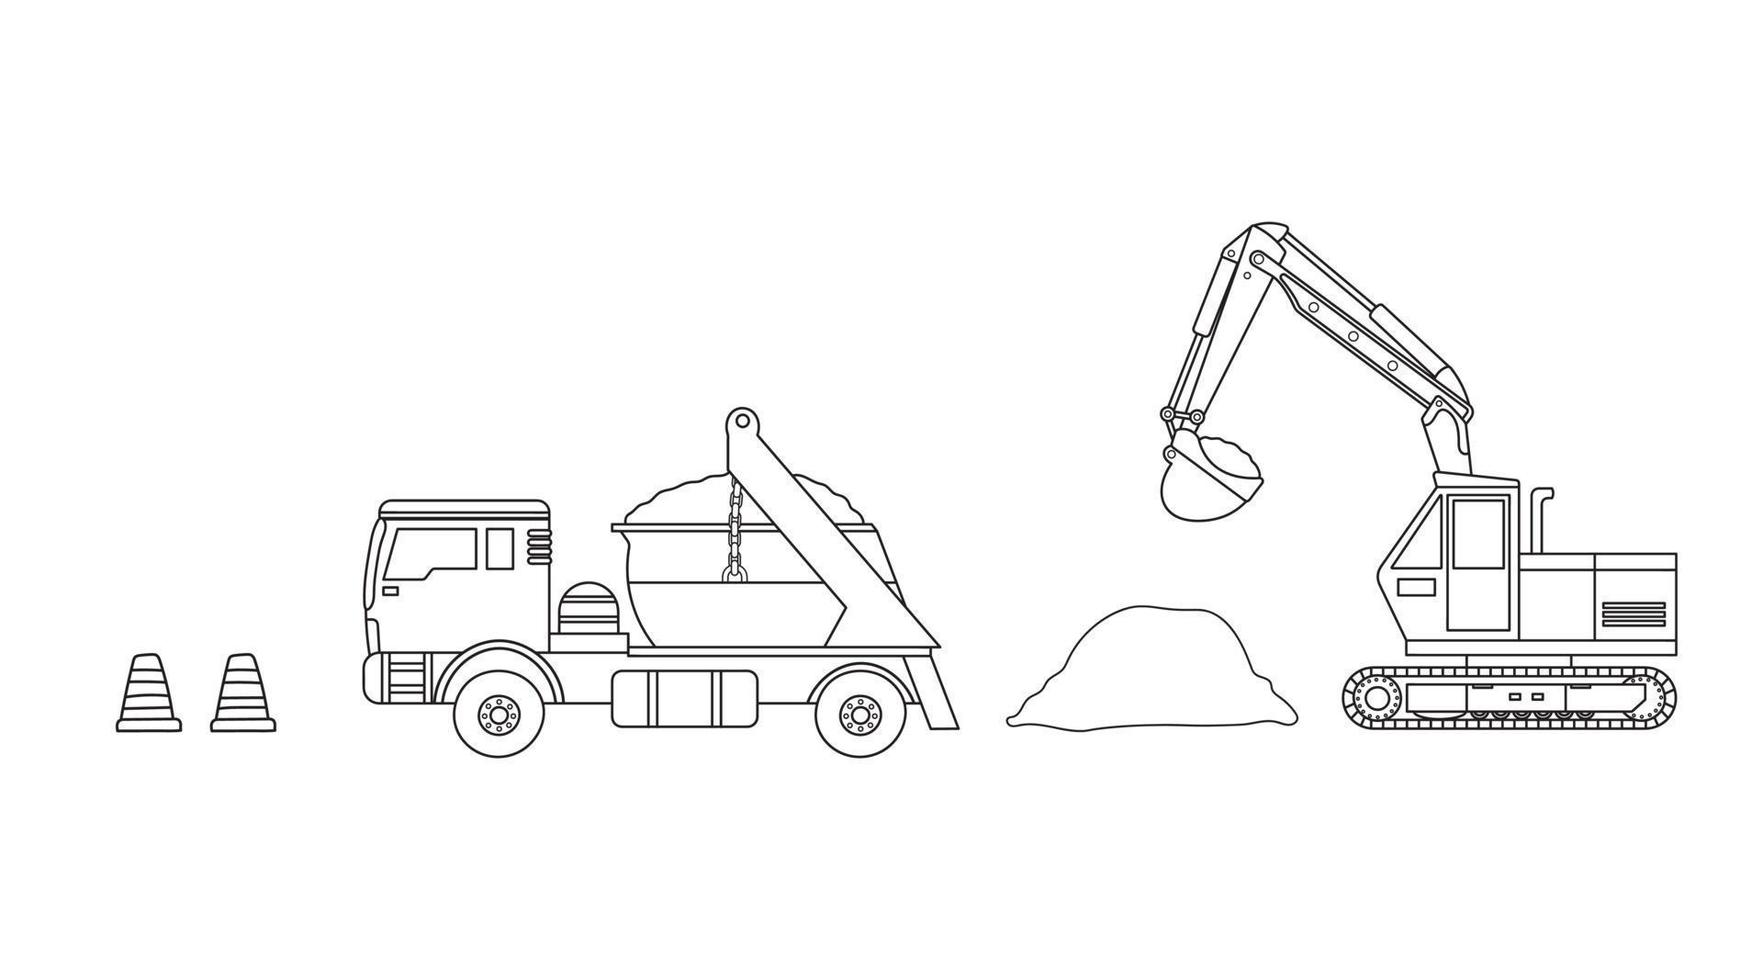 Hand drawn clip art color children set of construction mini excavator, dump truck, and traffic cones vector